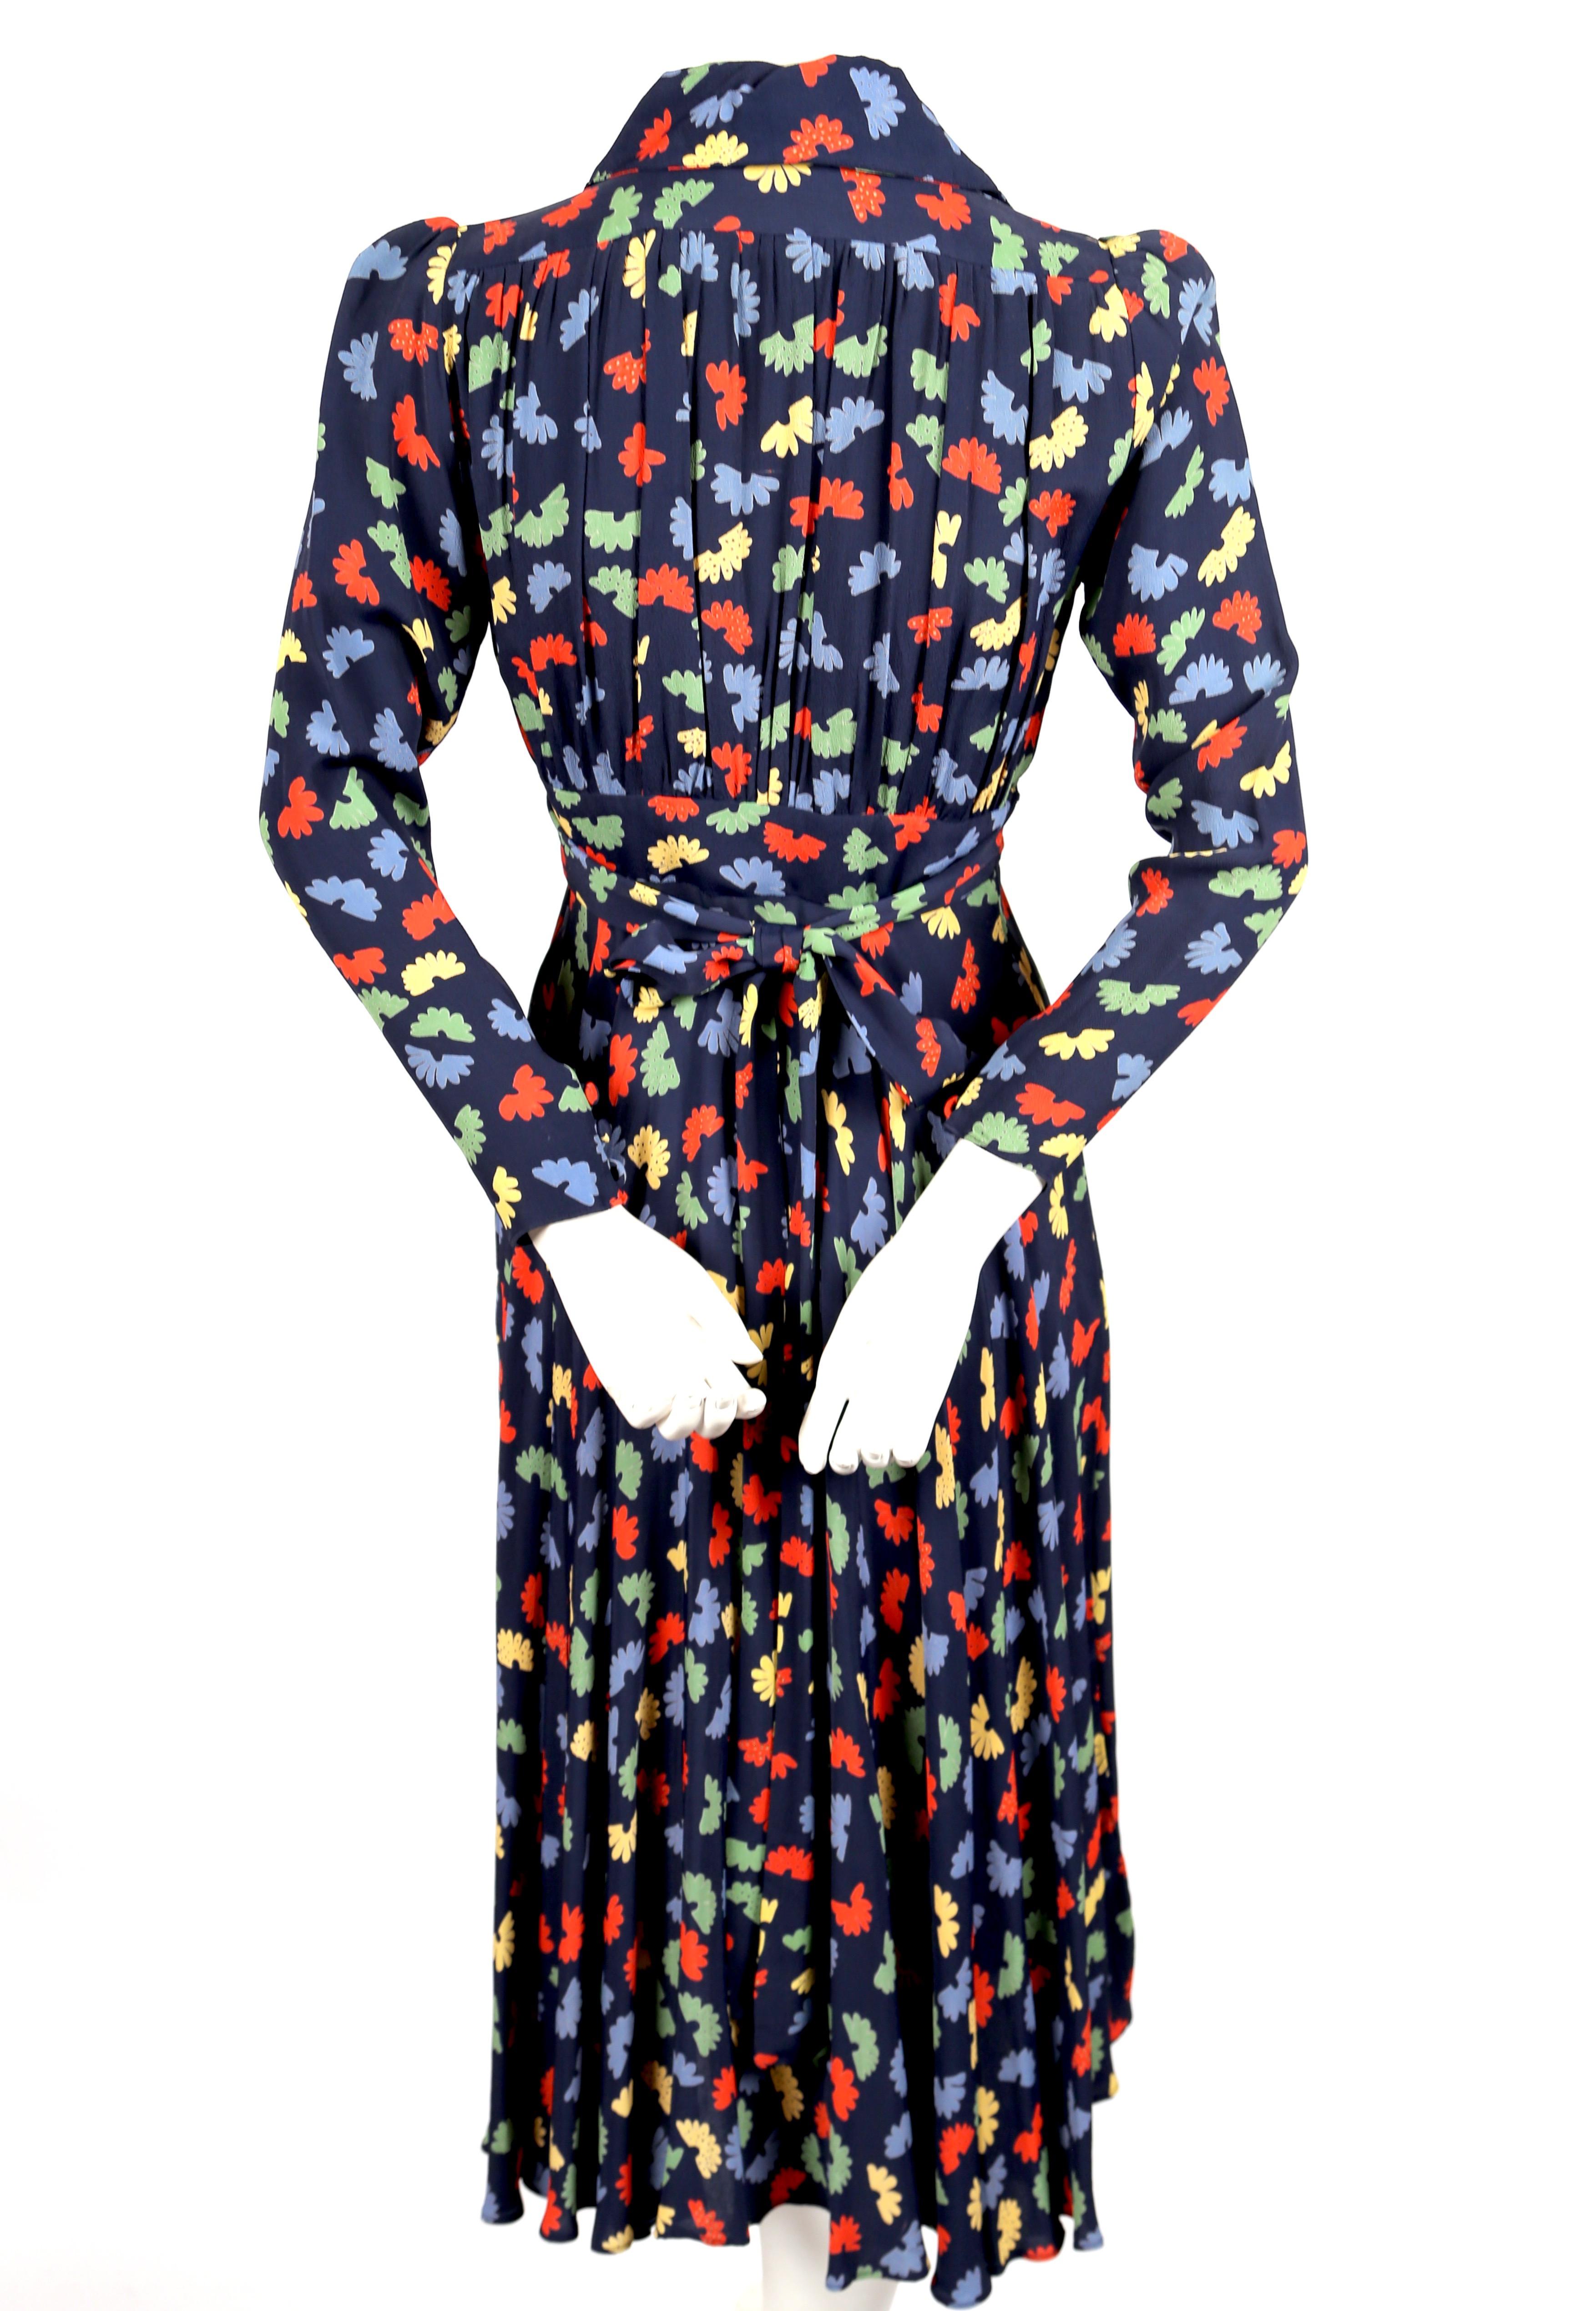 Black 1970's OSSIE CLARK for QUORUM Celia Birtwell fan print plunging neckline dress